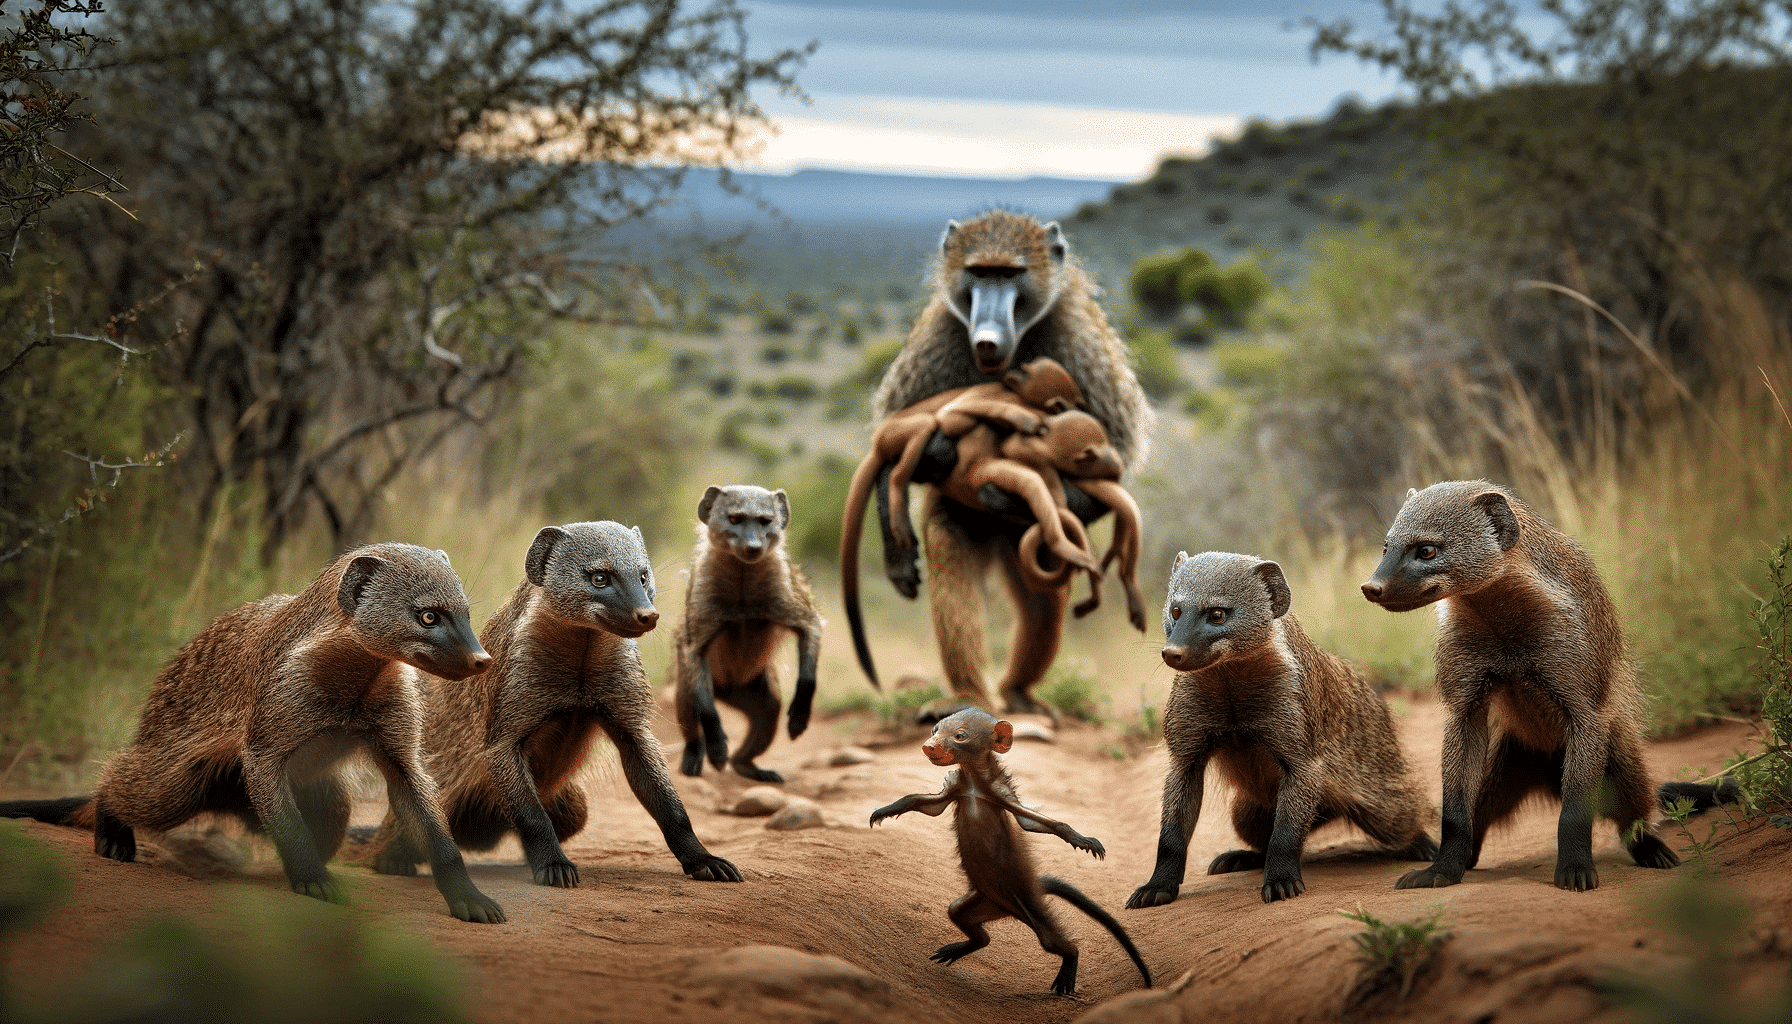 baboon carries mongoose